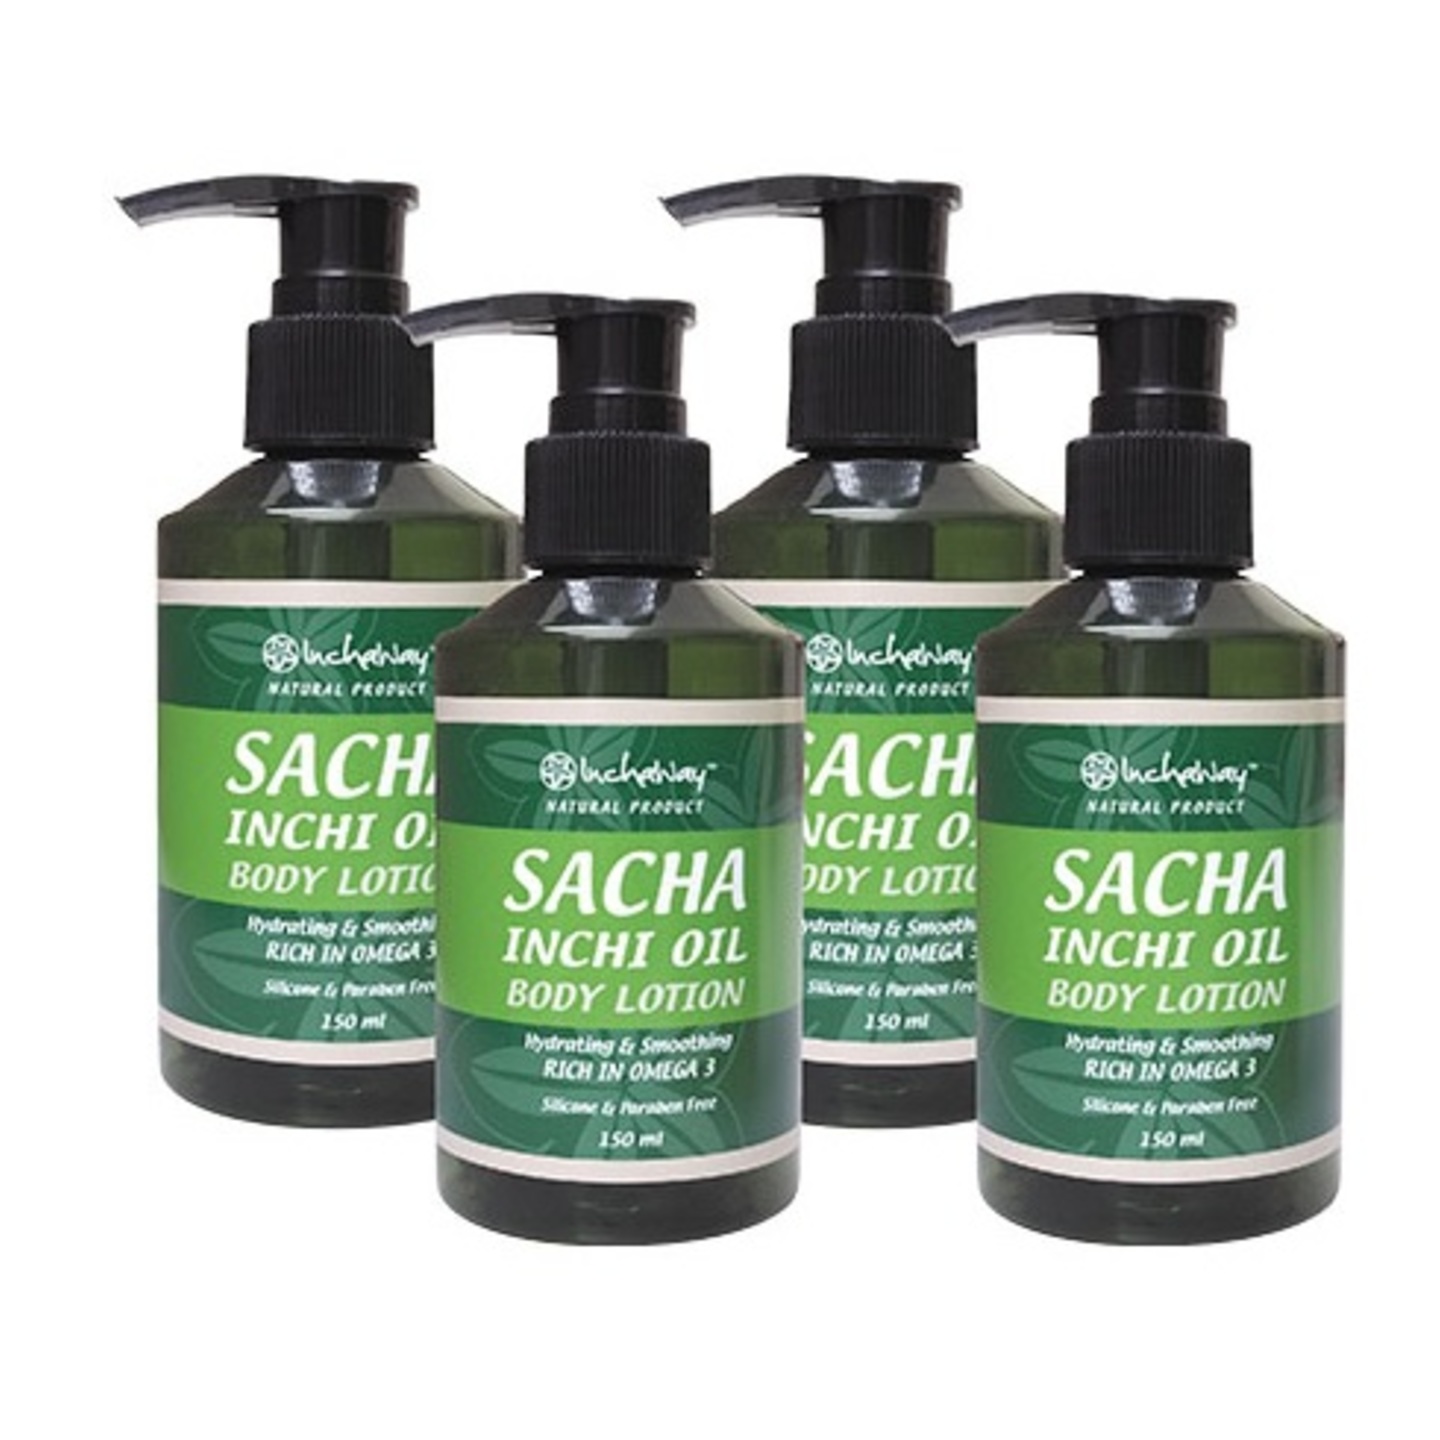 Sacha Inchi Oil Body Lotion